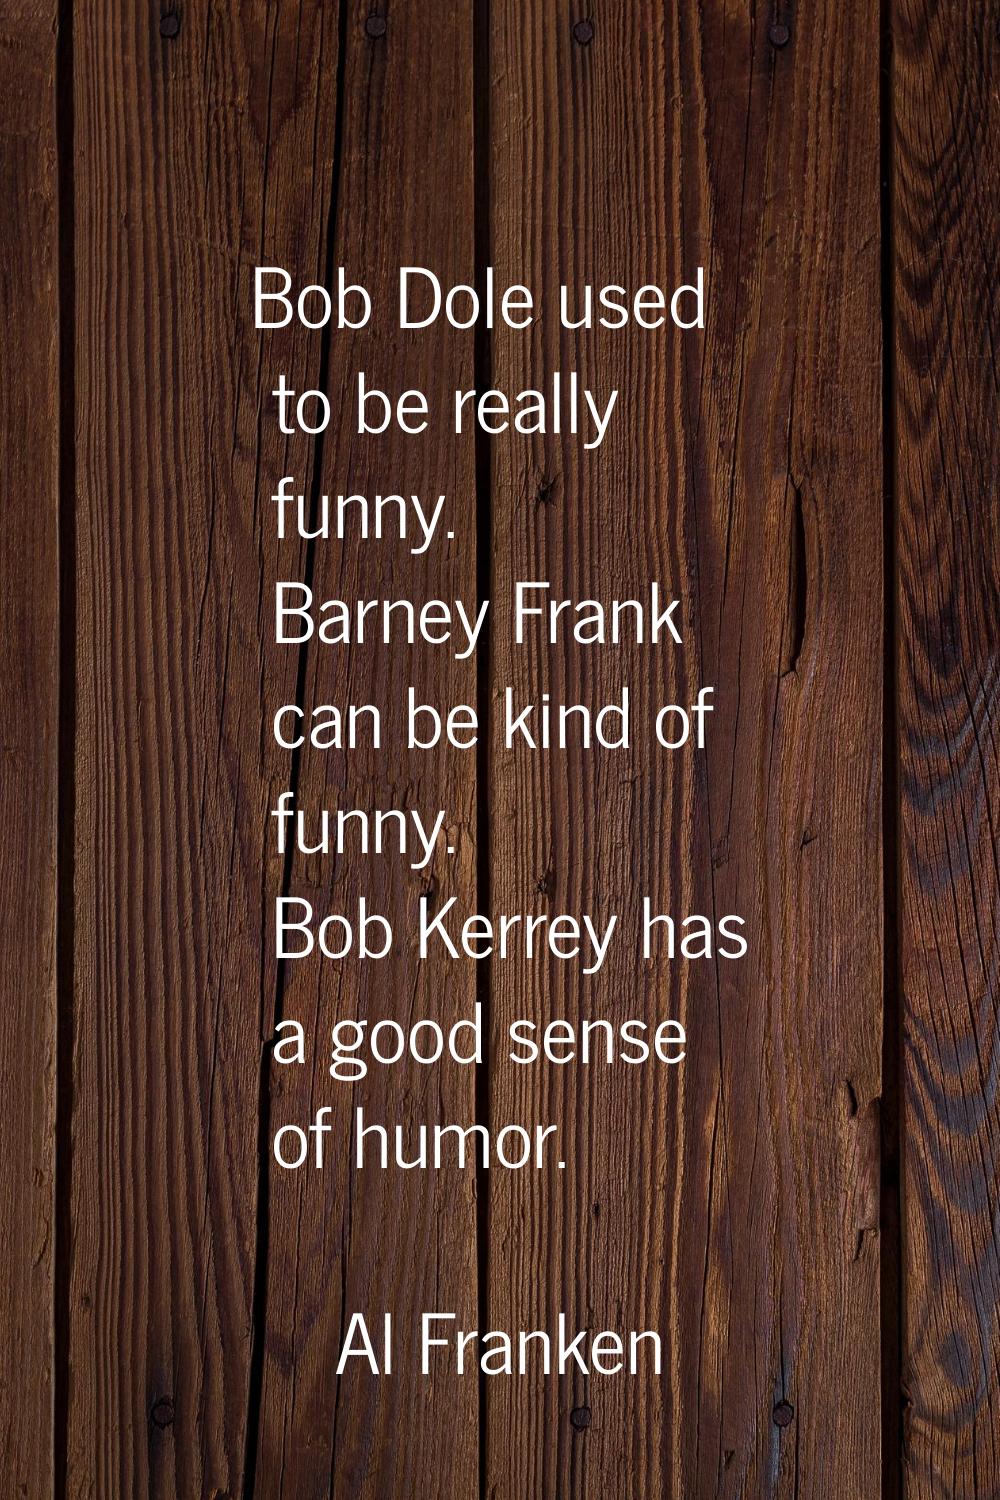 Bob Dole used to be really funny. Barney Frank can be kind of funny. Bob Kerrey has a good sense of